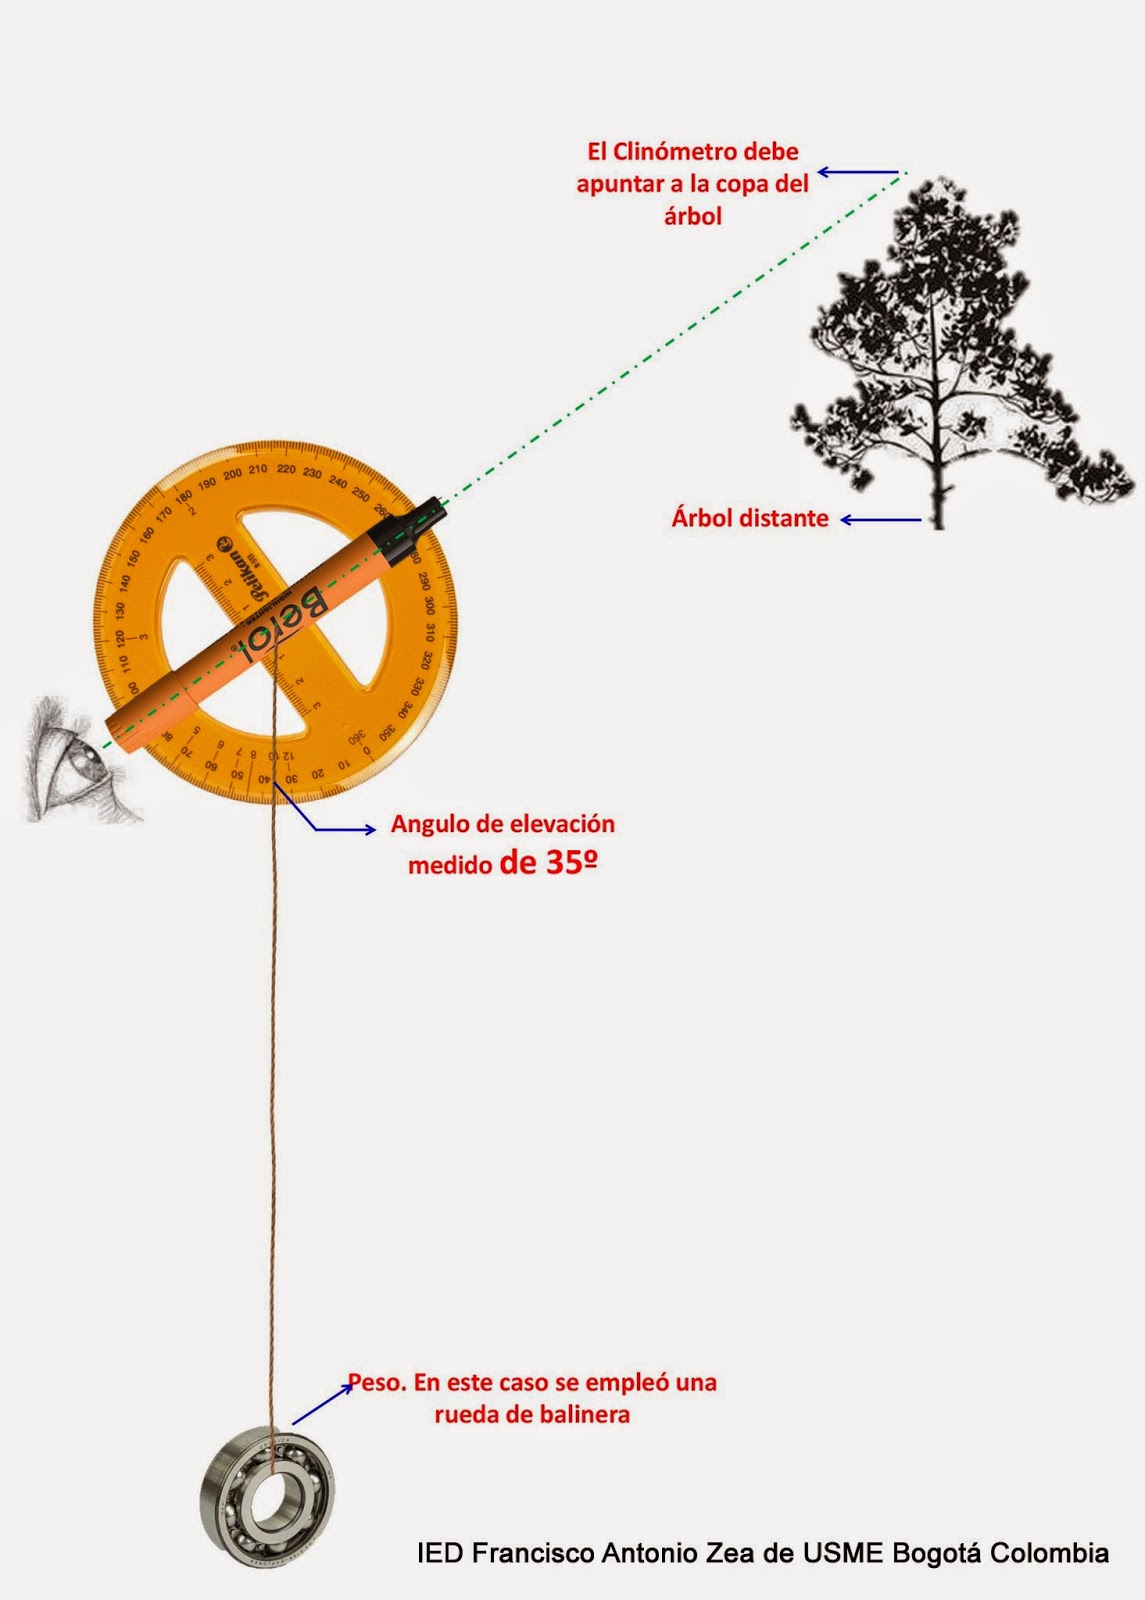 Details 48 clinómetro para medir altura árboles